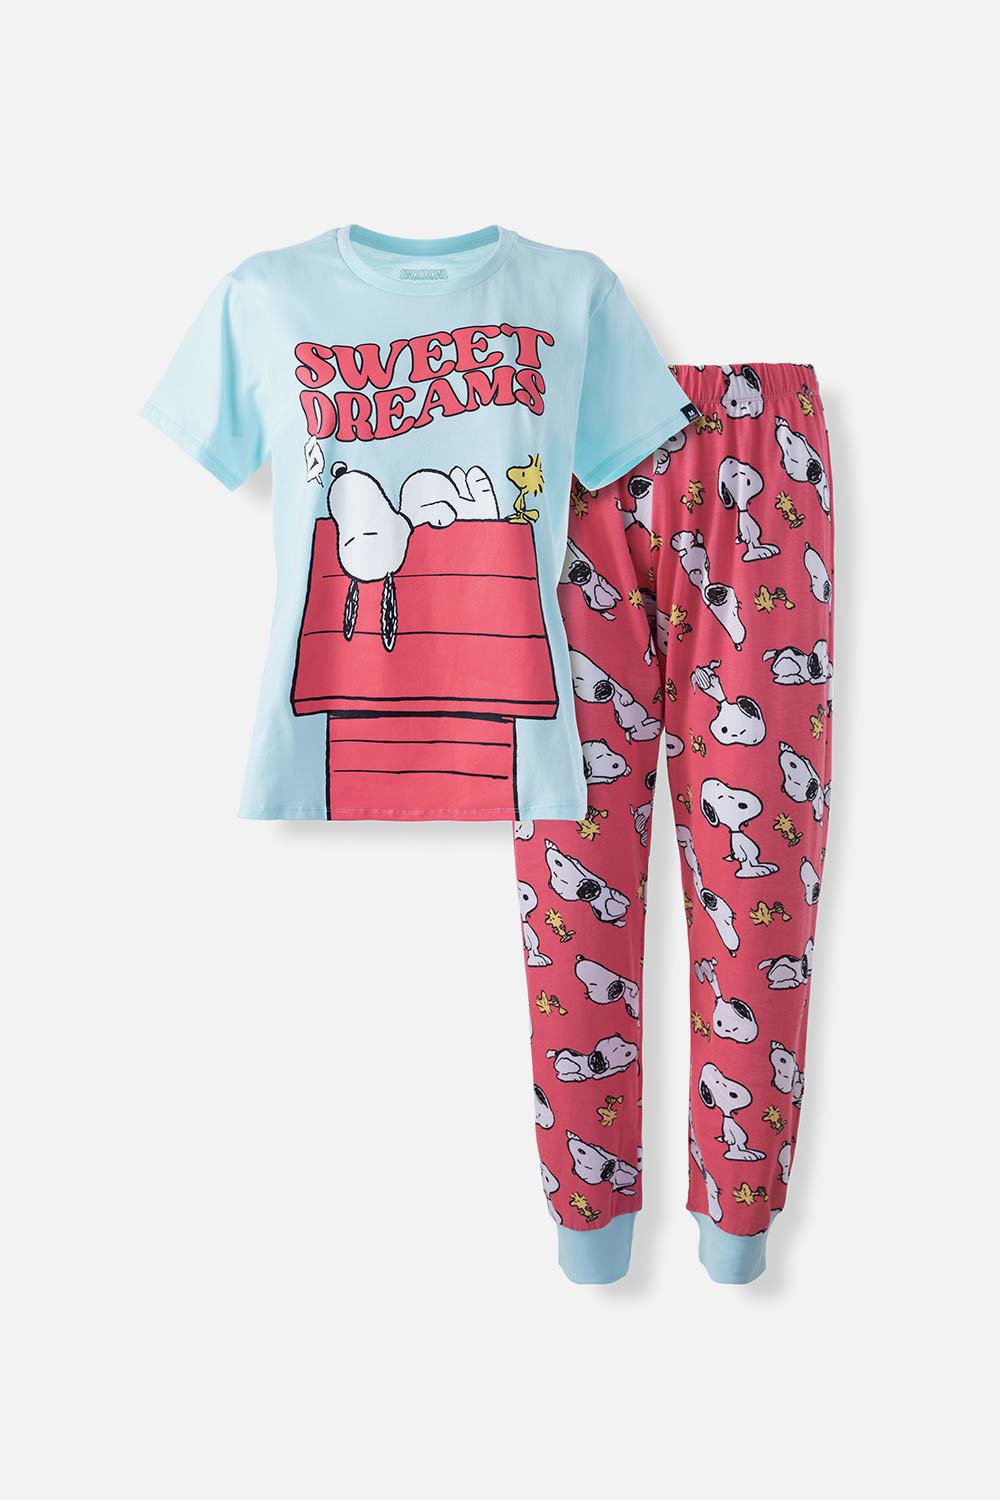 Pijama de Snoopy, pantalón largo Azul Claro/ Coral para mujer XS-0